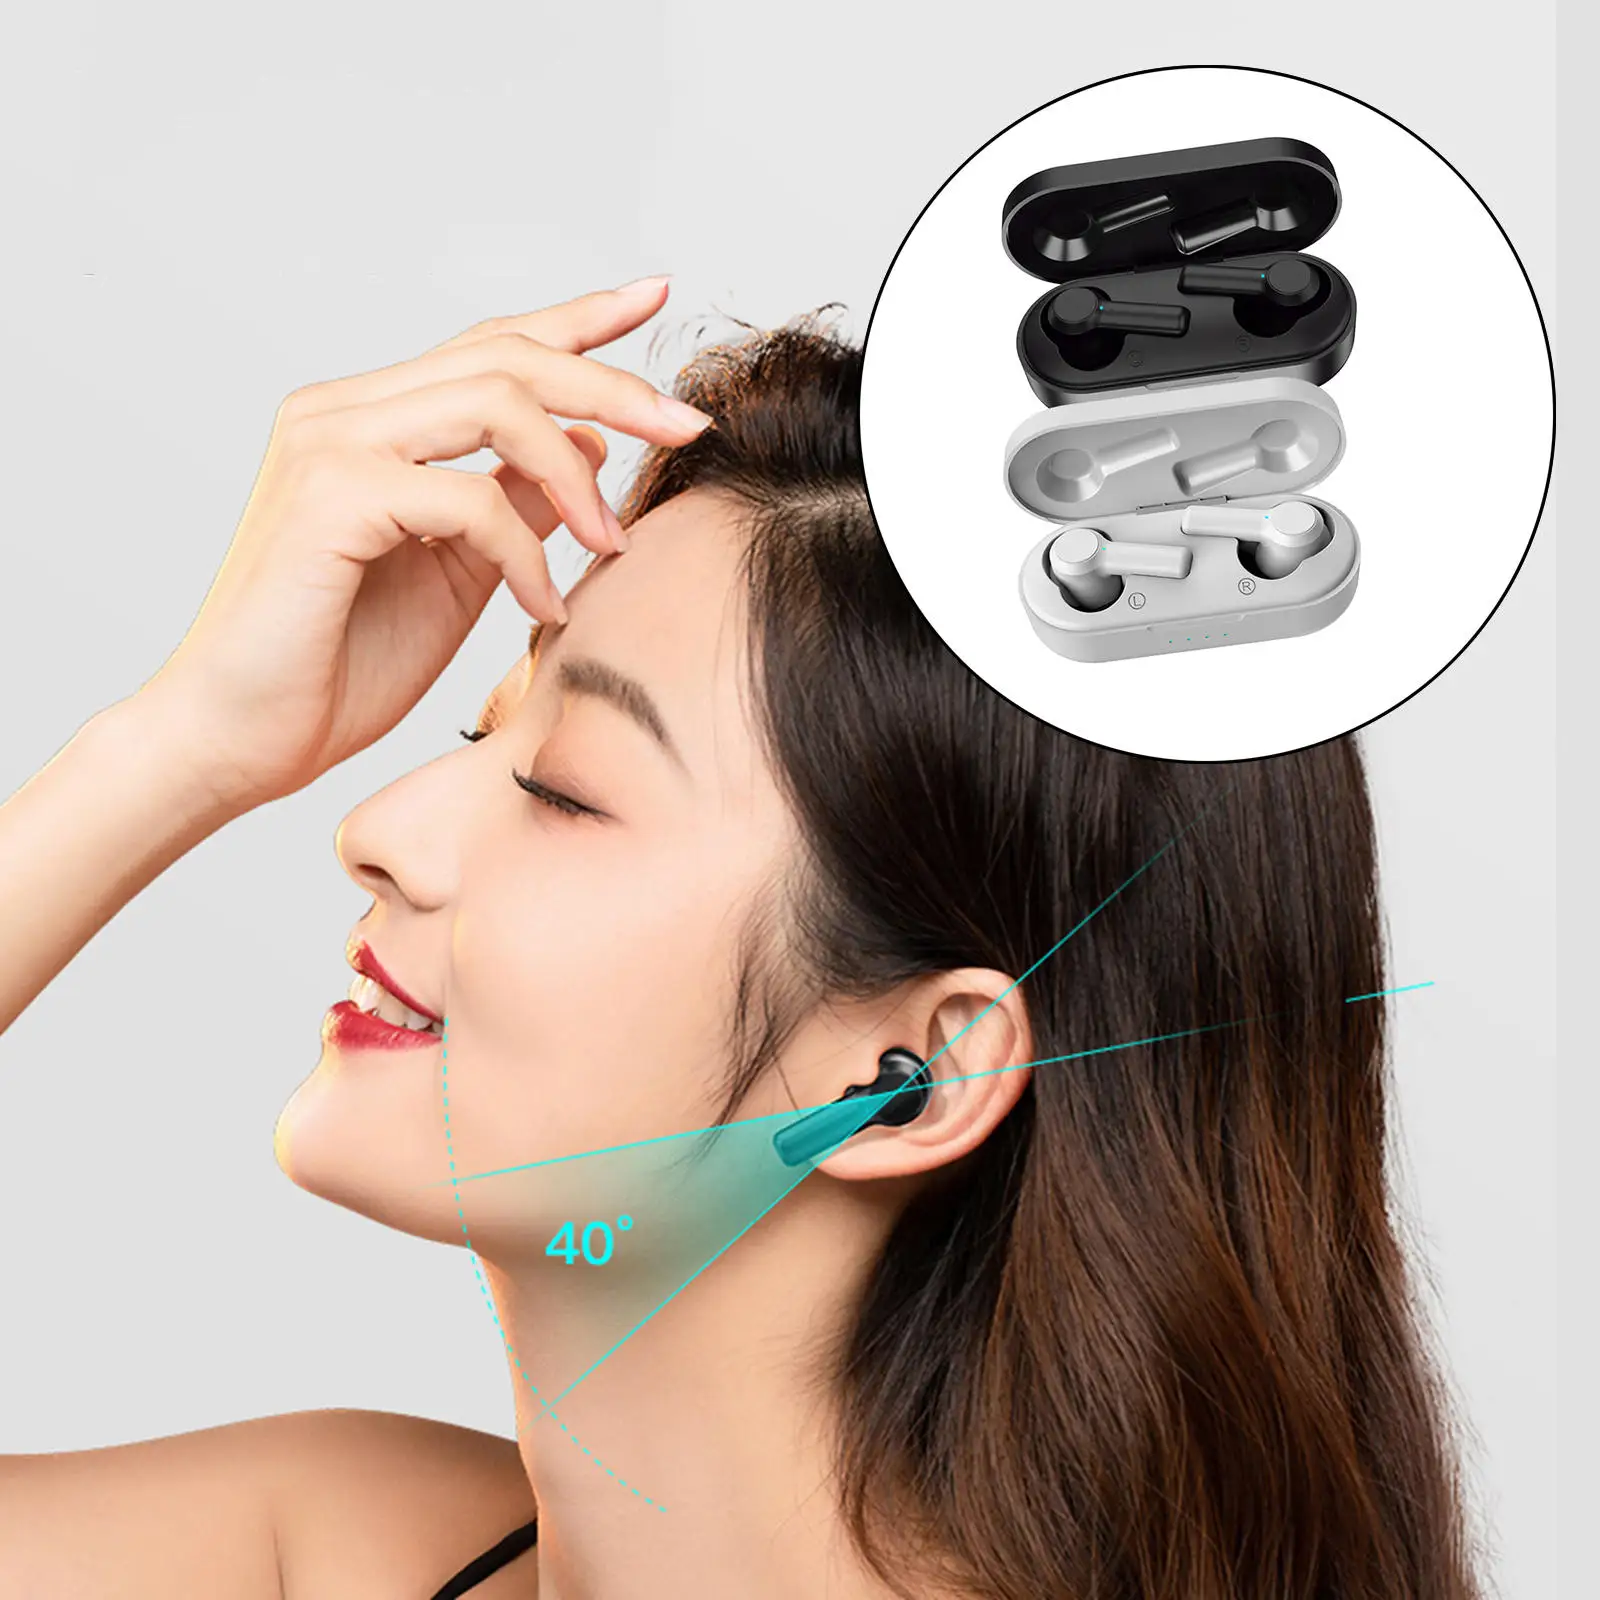  Bluetooth Headphones True Wireless Smart Indicator Light Bluetooth 5.0 Earbuds Earpiece for Workout Music Gaming Life Sport